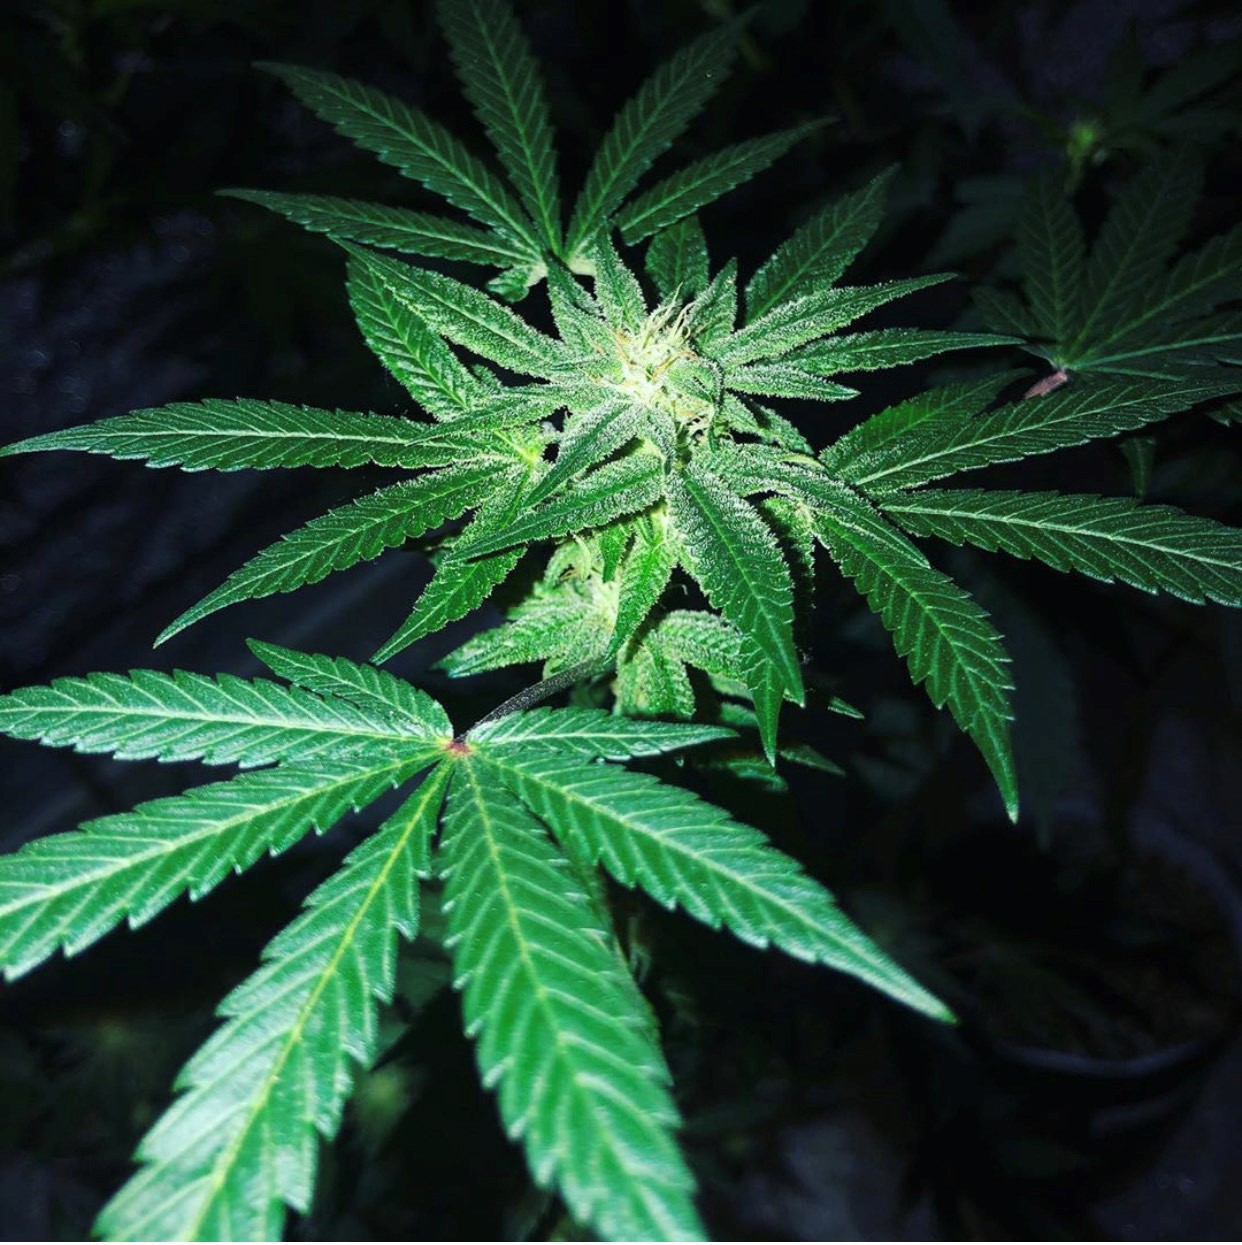 Exploration of Cannabis and Hemp- Cross-County Travel to Oregon